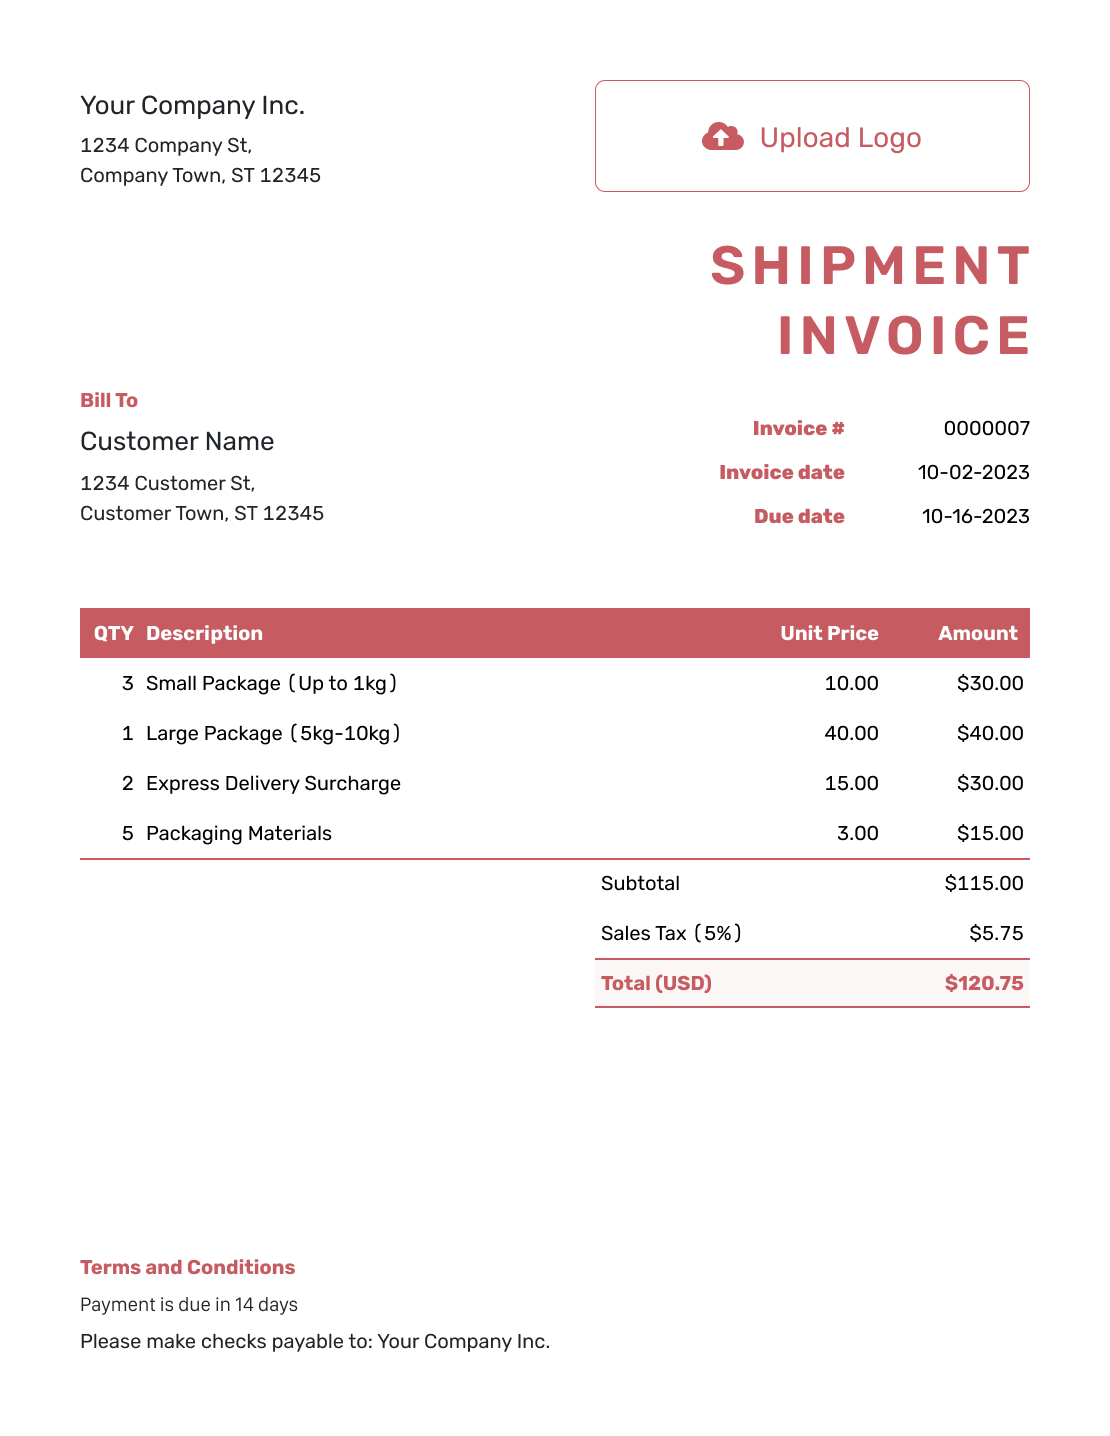 Itemized Shipment Invoice Template